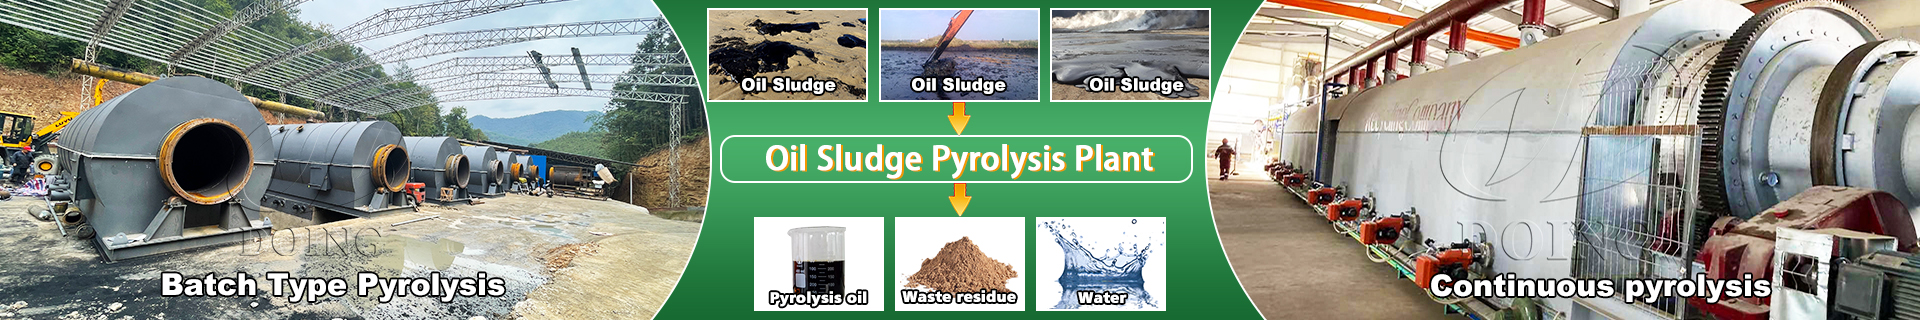 Oil Sludge Pyrolysis Plant